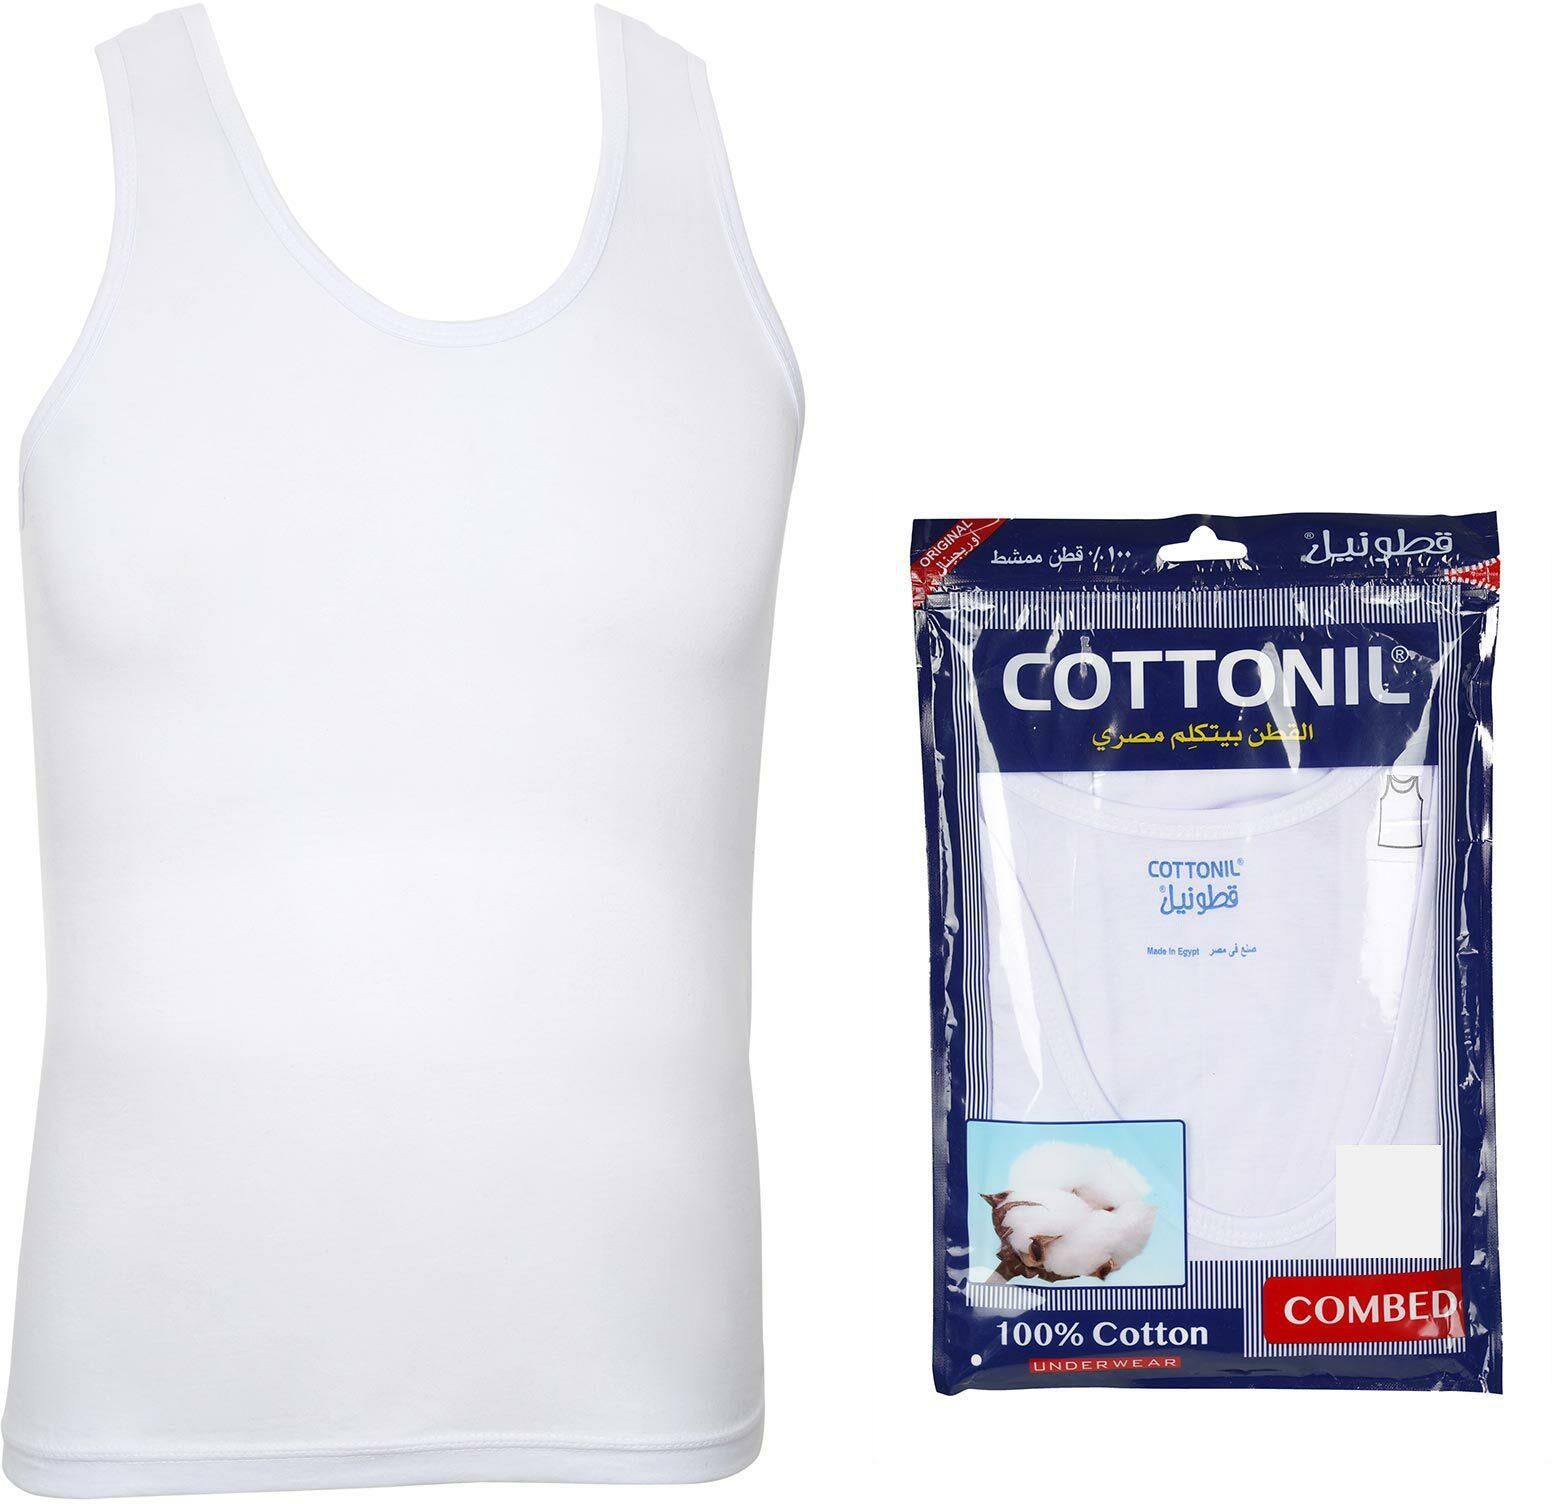 Cottonil white undershirt vest combed medium